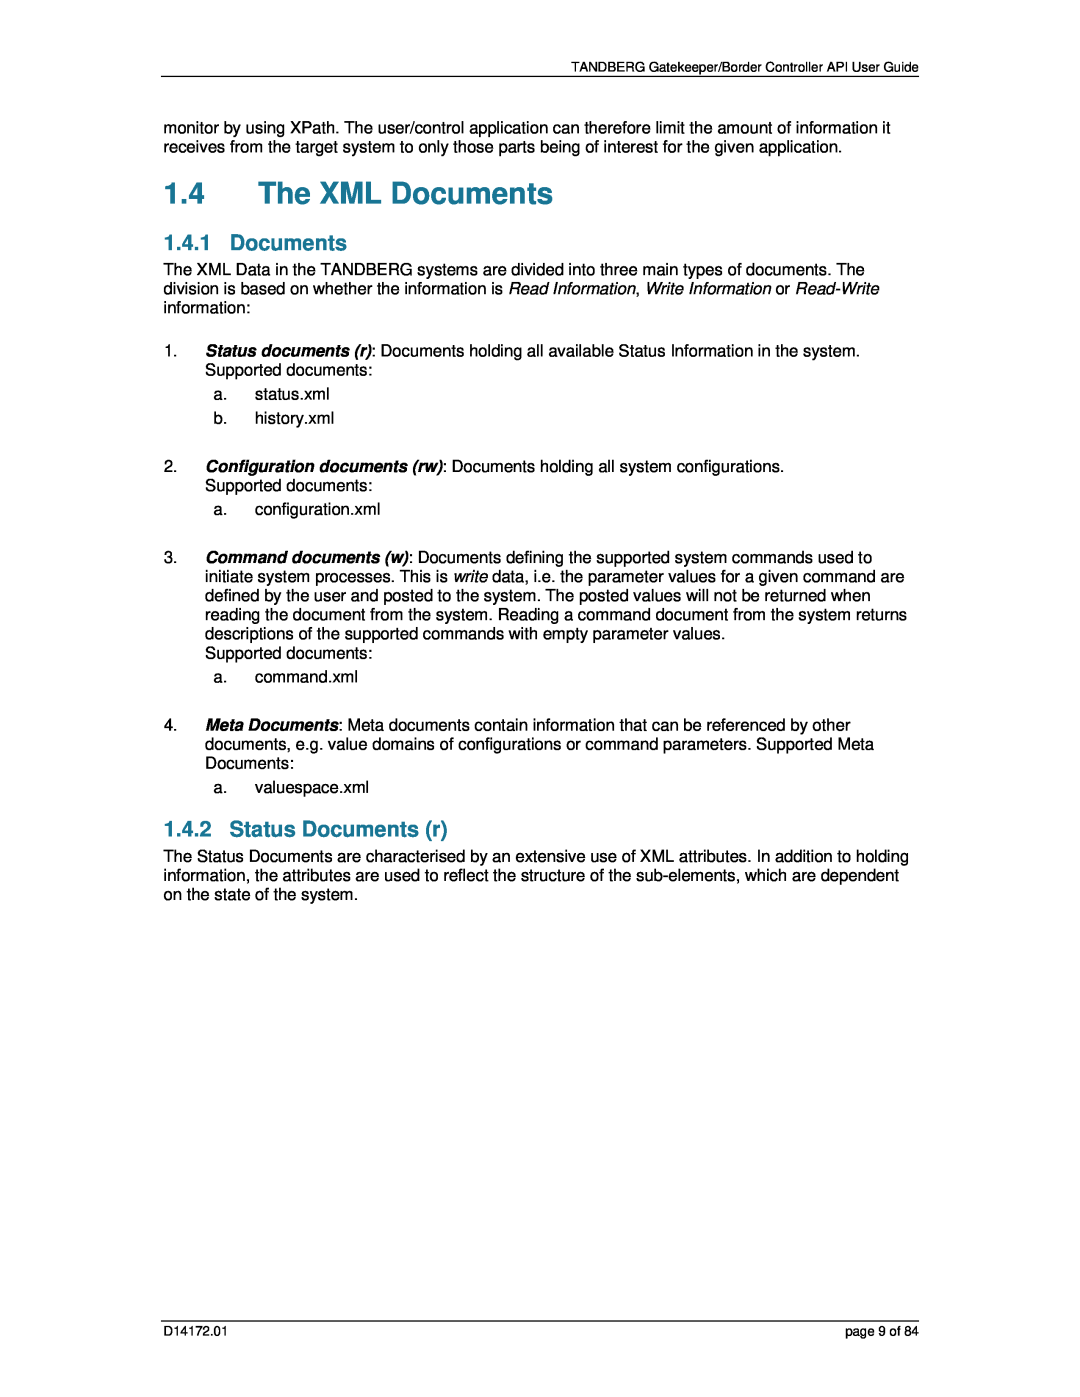 TANDBERG D14172.01 manual The XML Documents, Status Documents r 